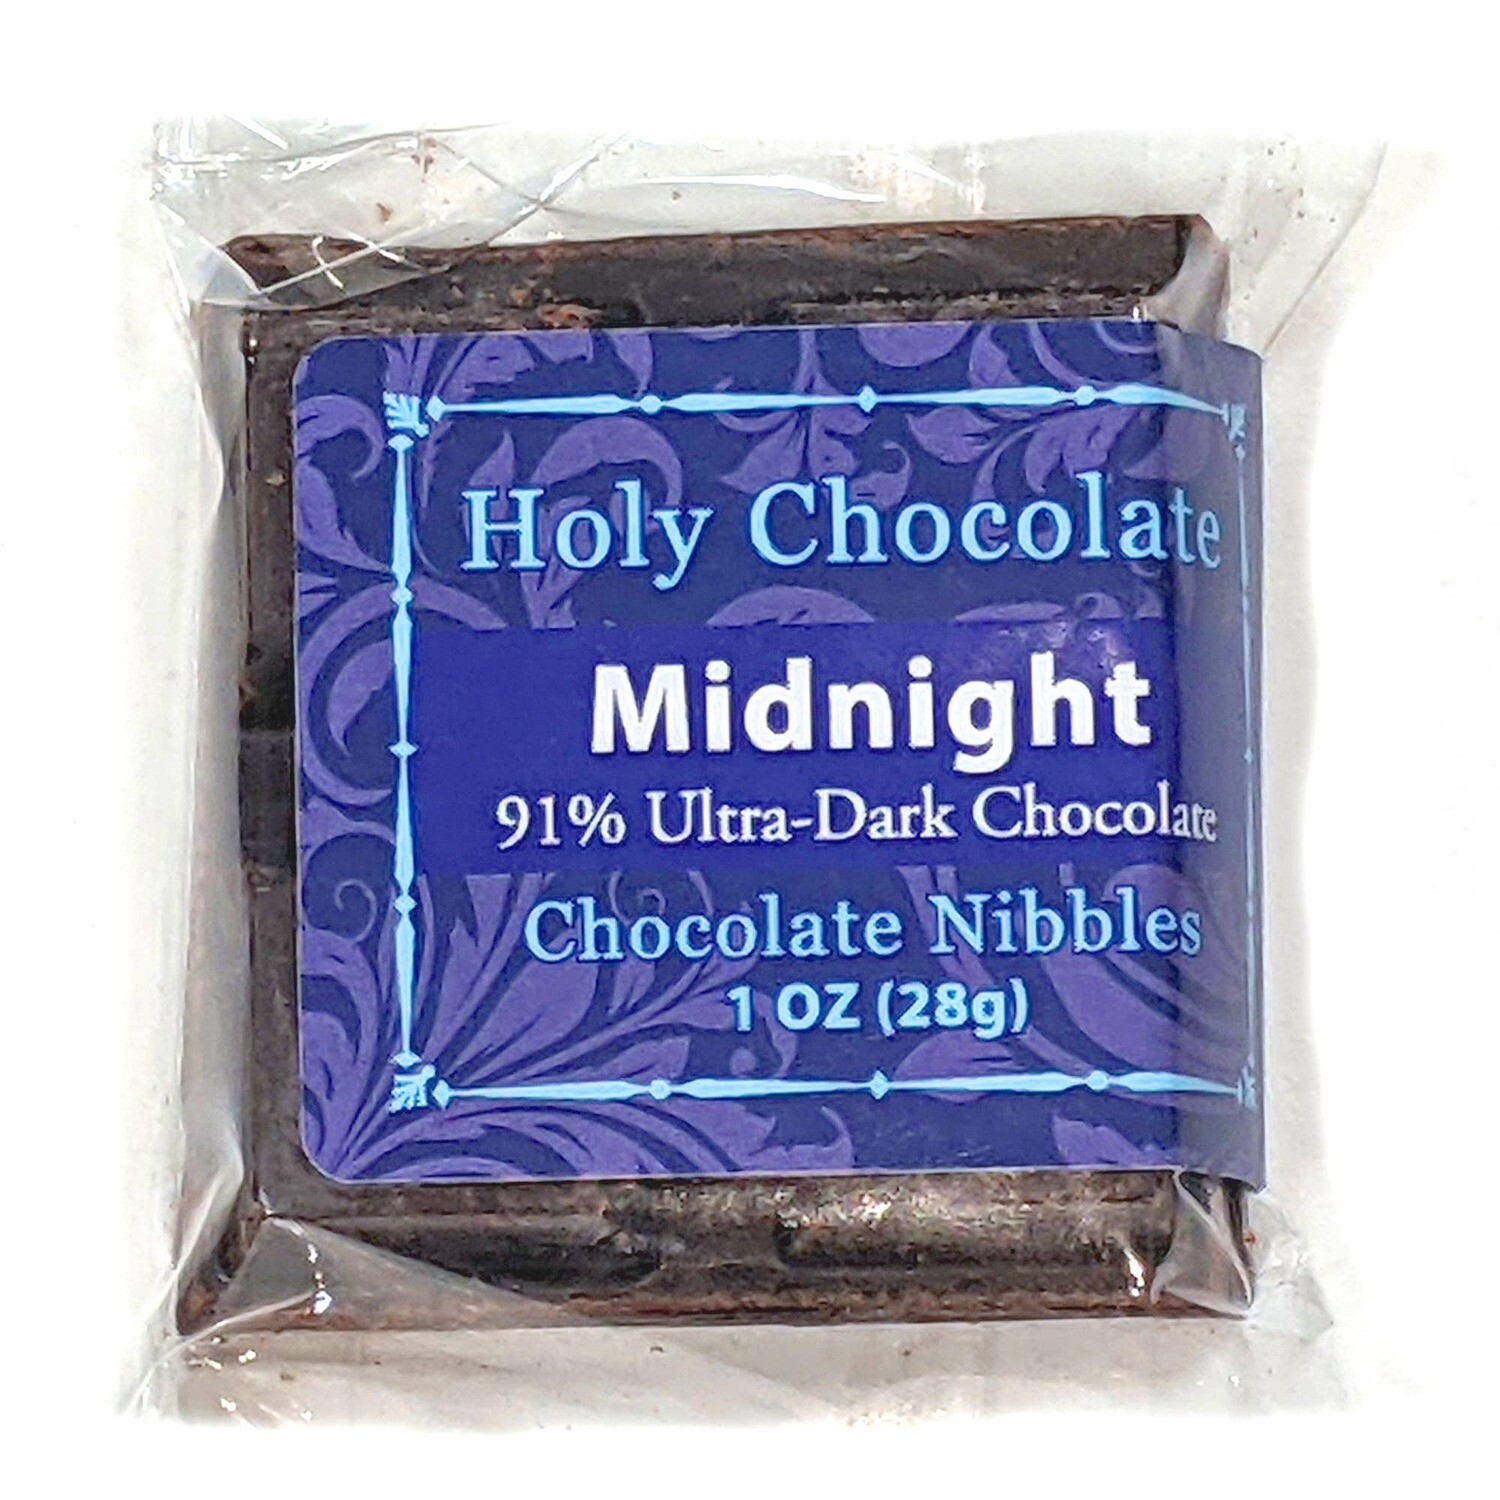 Midnight Holy Chocolate